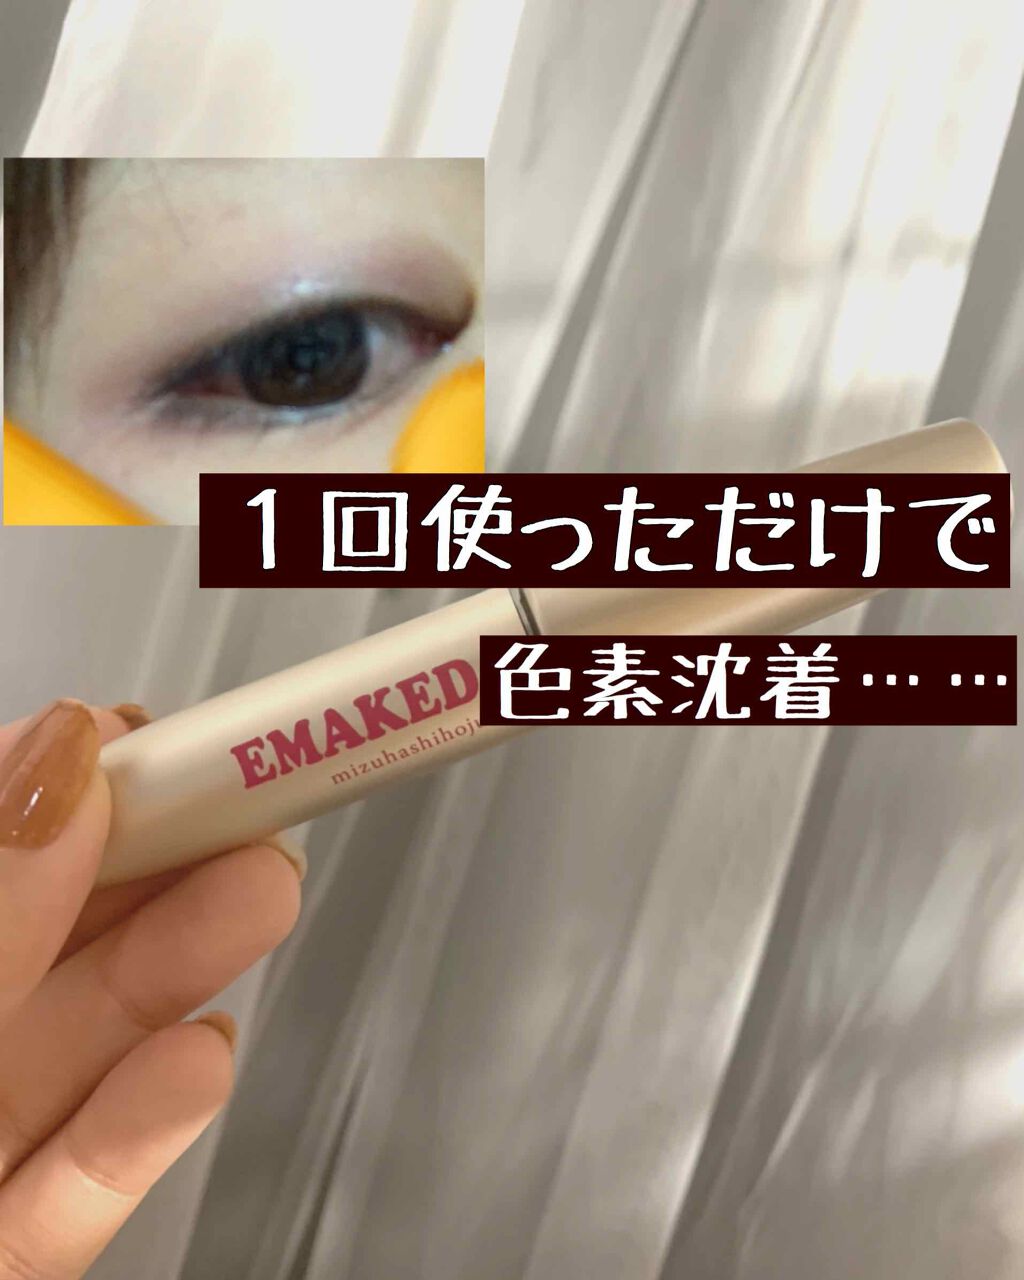 Emaked 水橋保寿堂製薬の辛口レビュー こんにちは 今回は私が使ったまつげ美容液に By きぃ 乾燥肌 10代後半 Lips